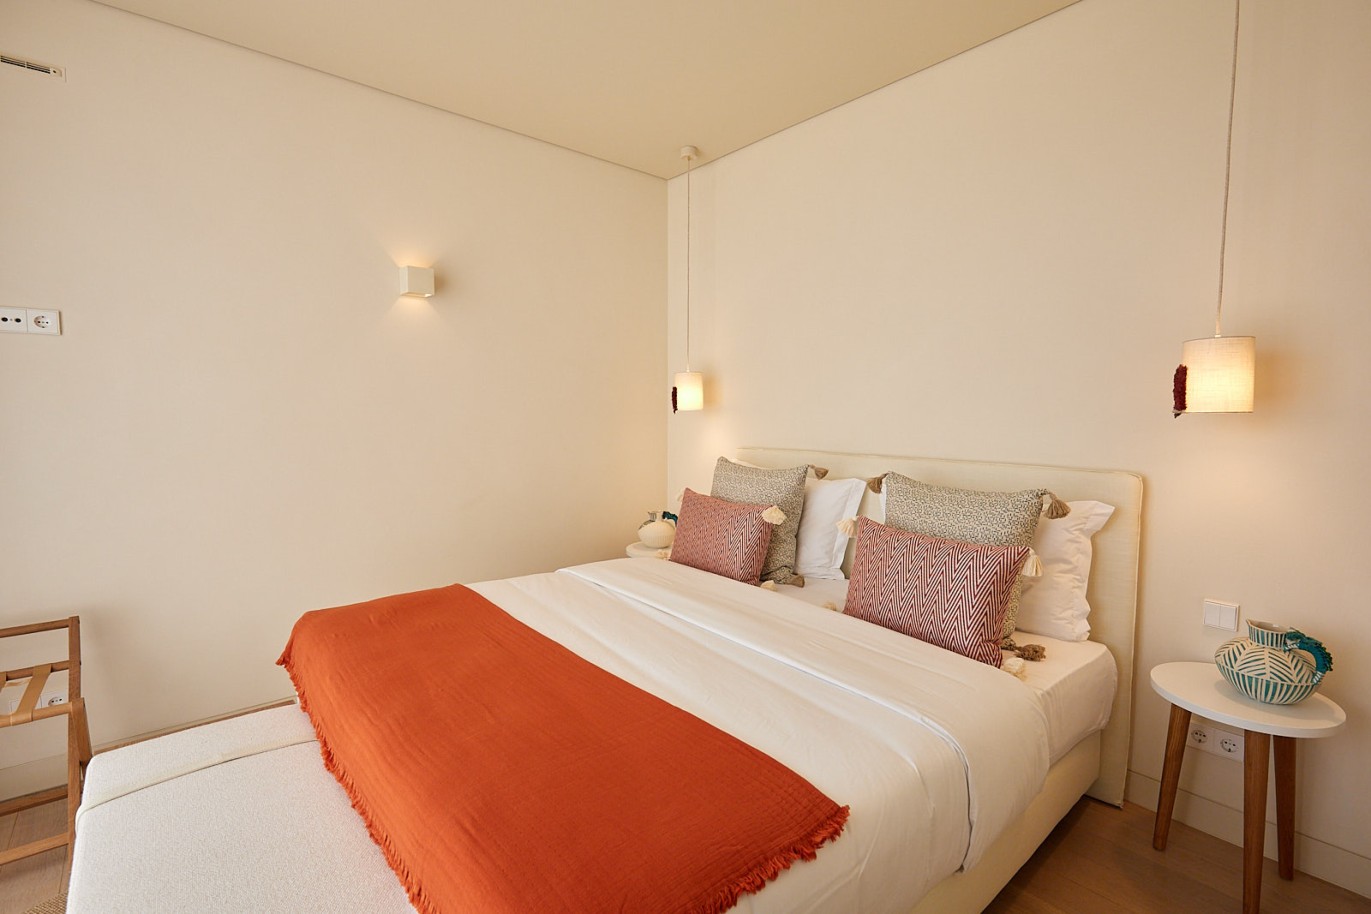 2 bedroom apartment in resort, for sale in Porches, Algarve_228945